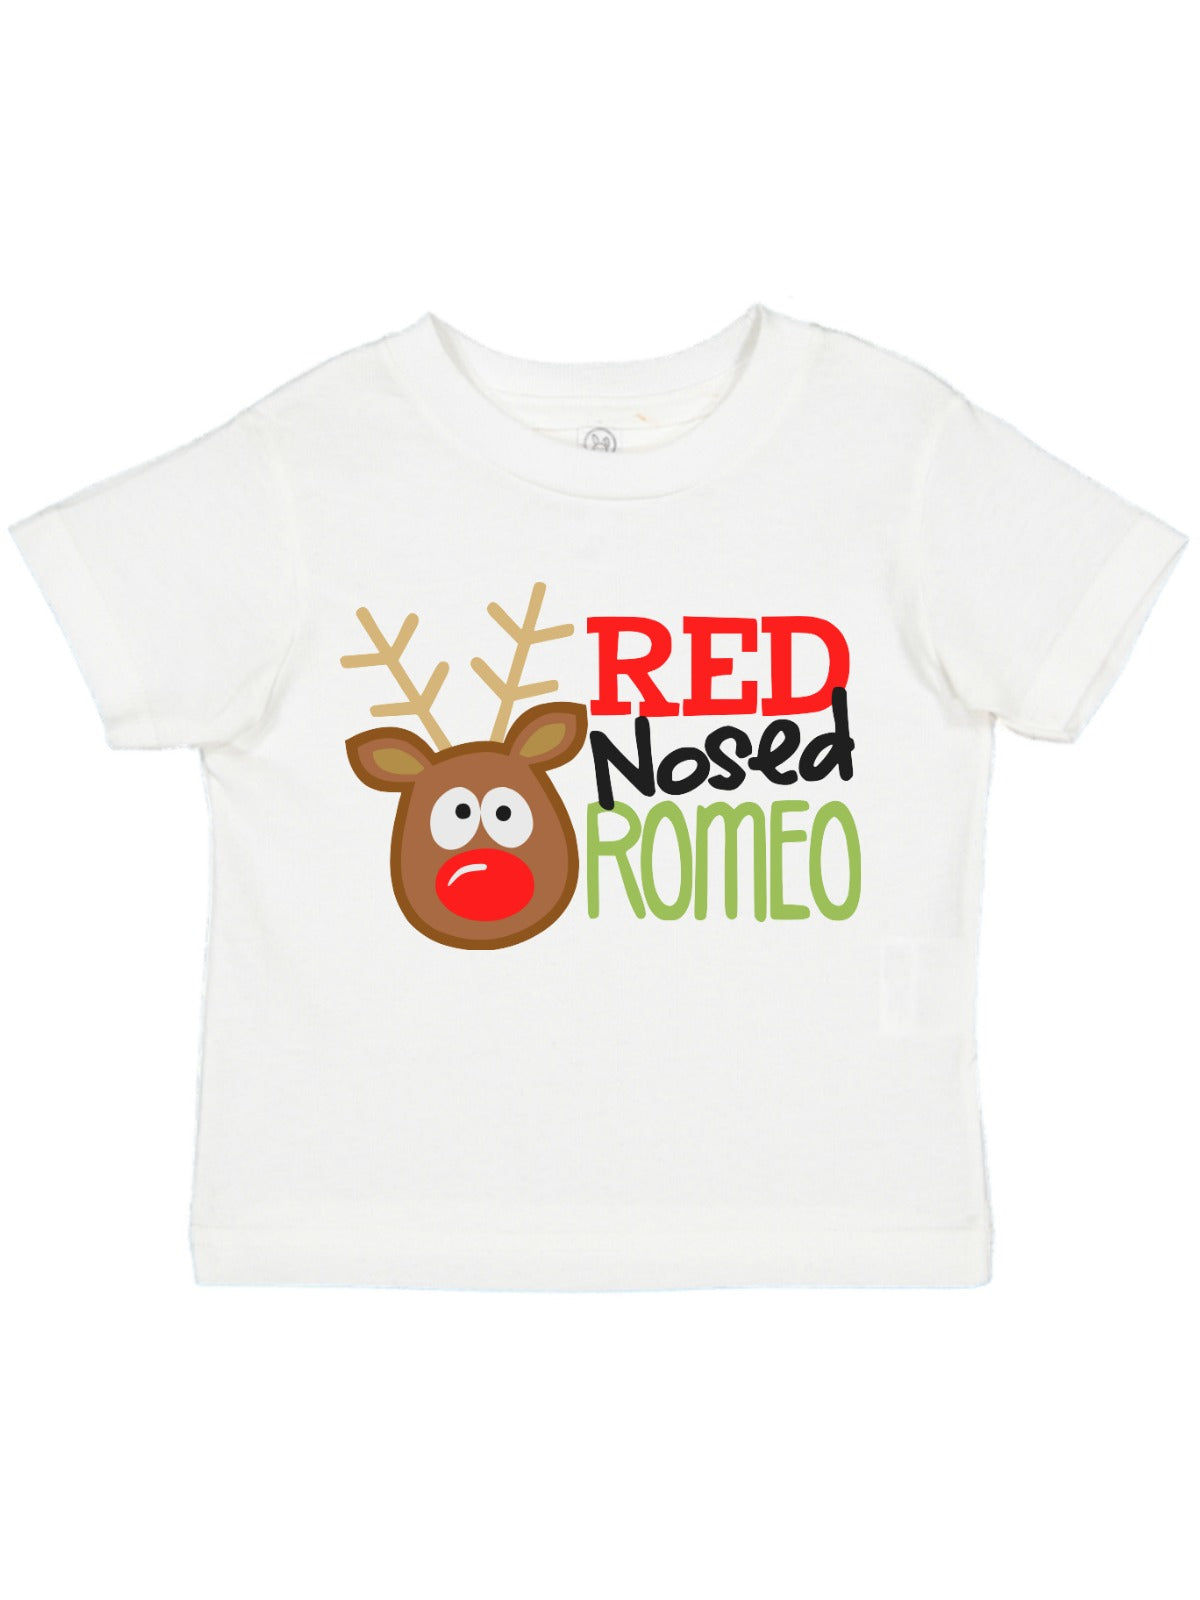 red nosed romeo boys Christmas t-shirt